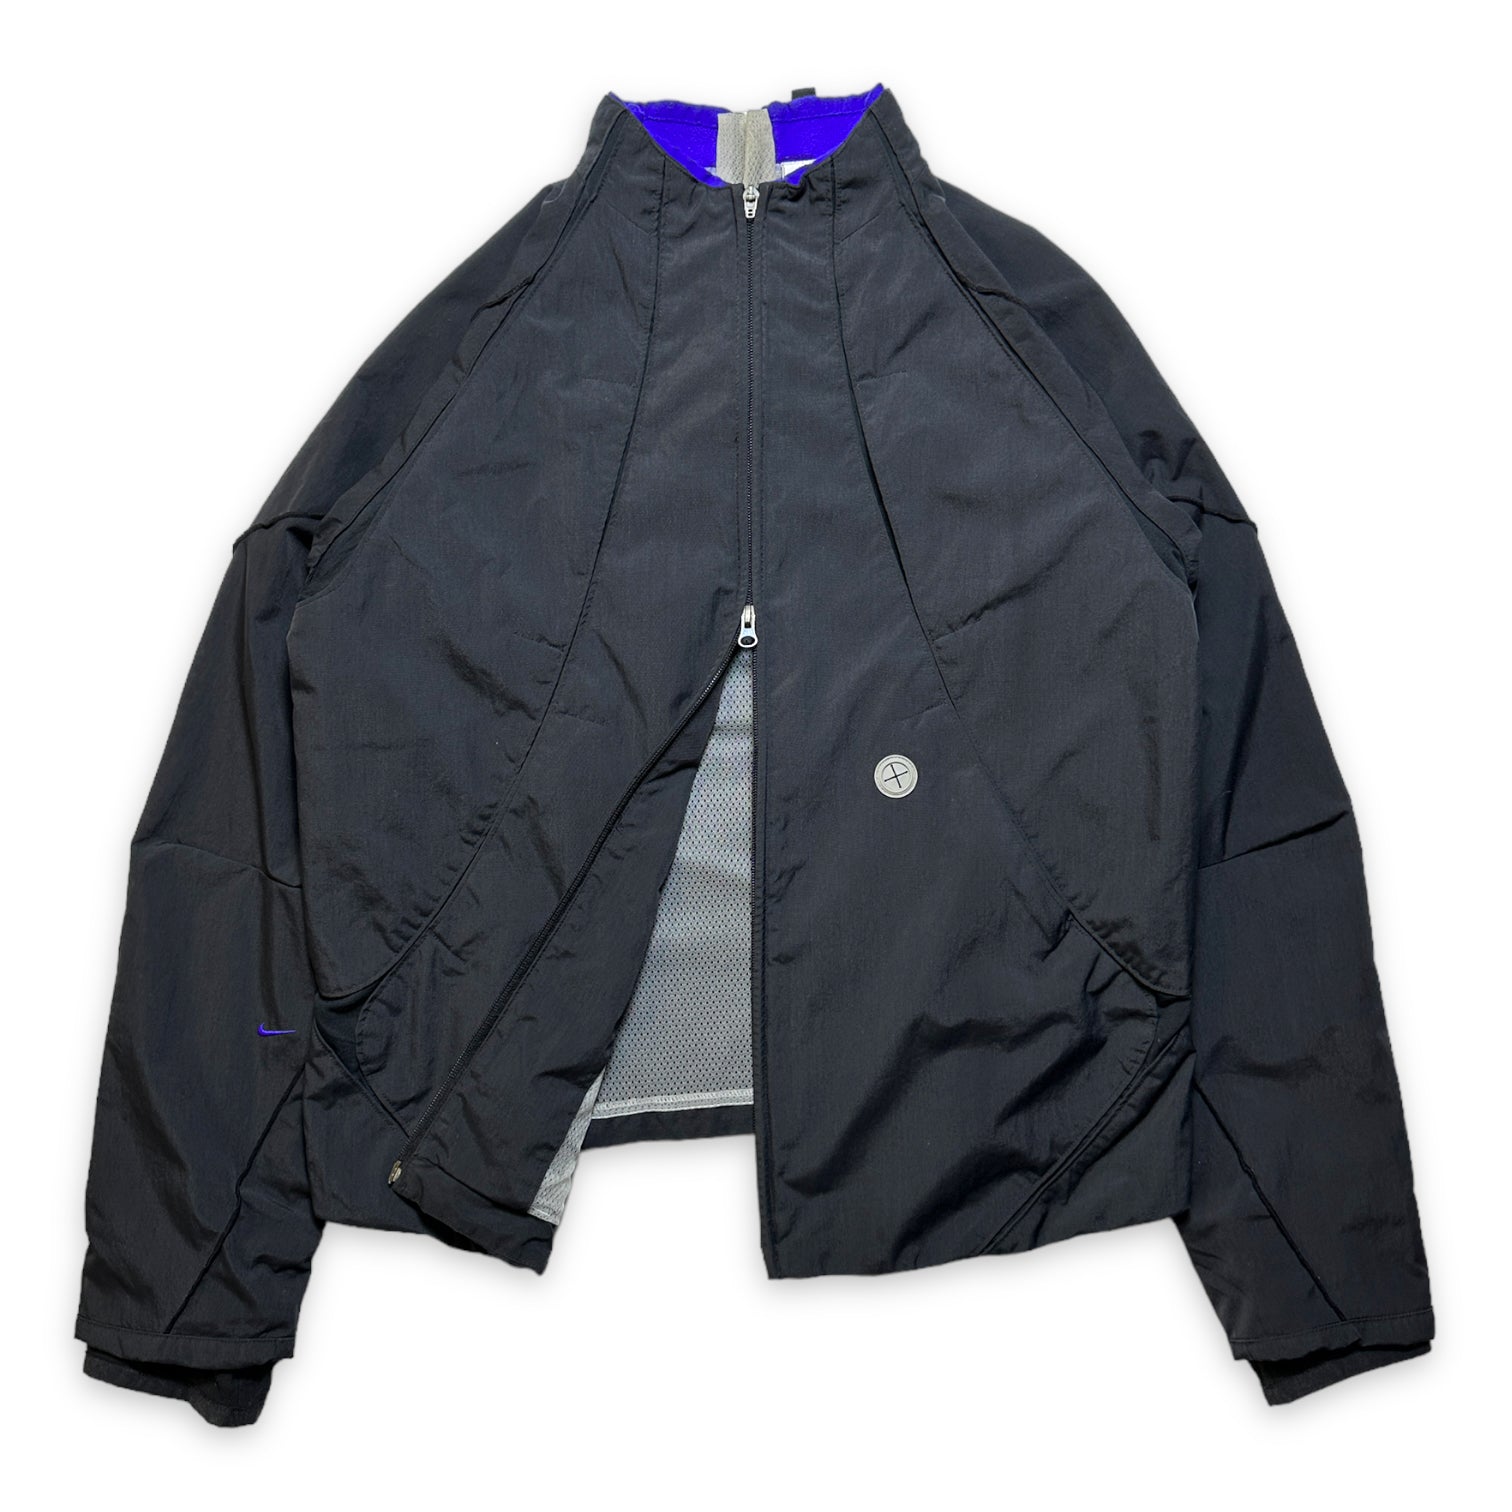 tony spackman 2002 mobius jacket black | marketingparafotografos ...